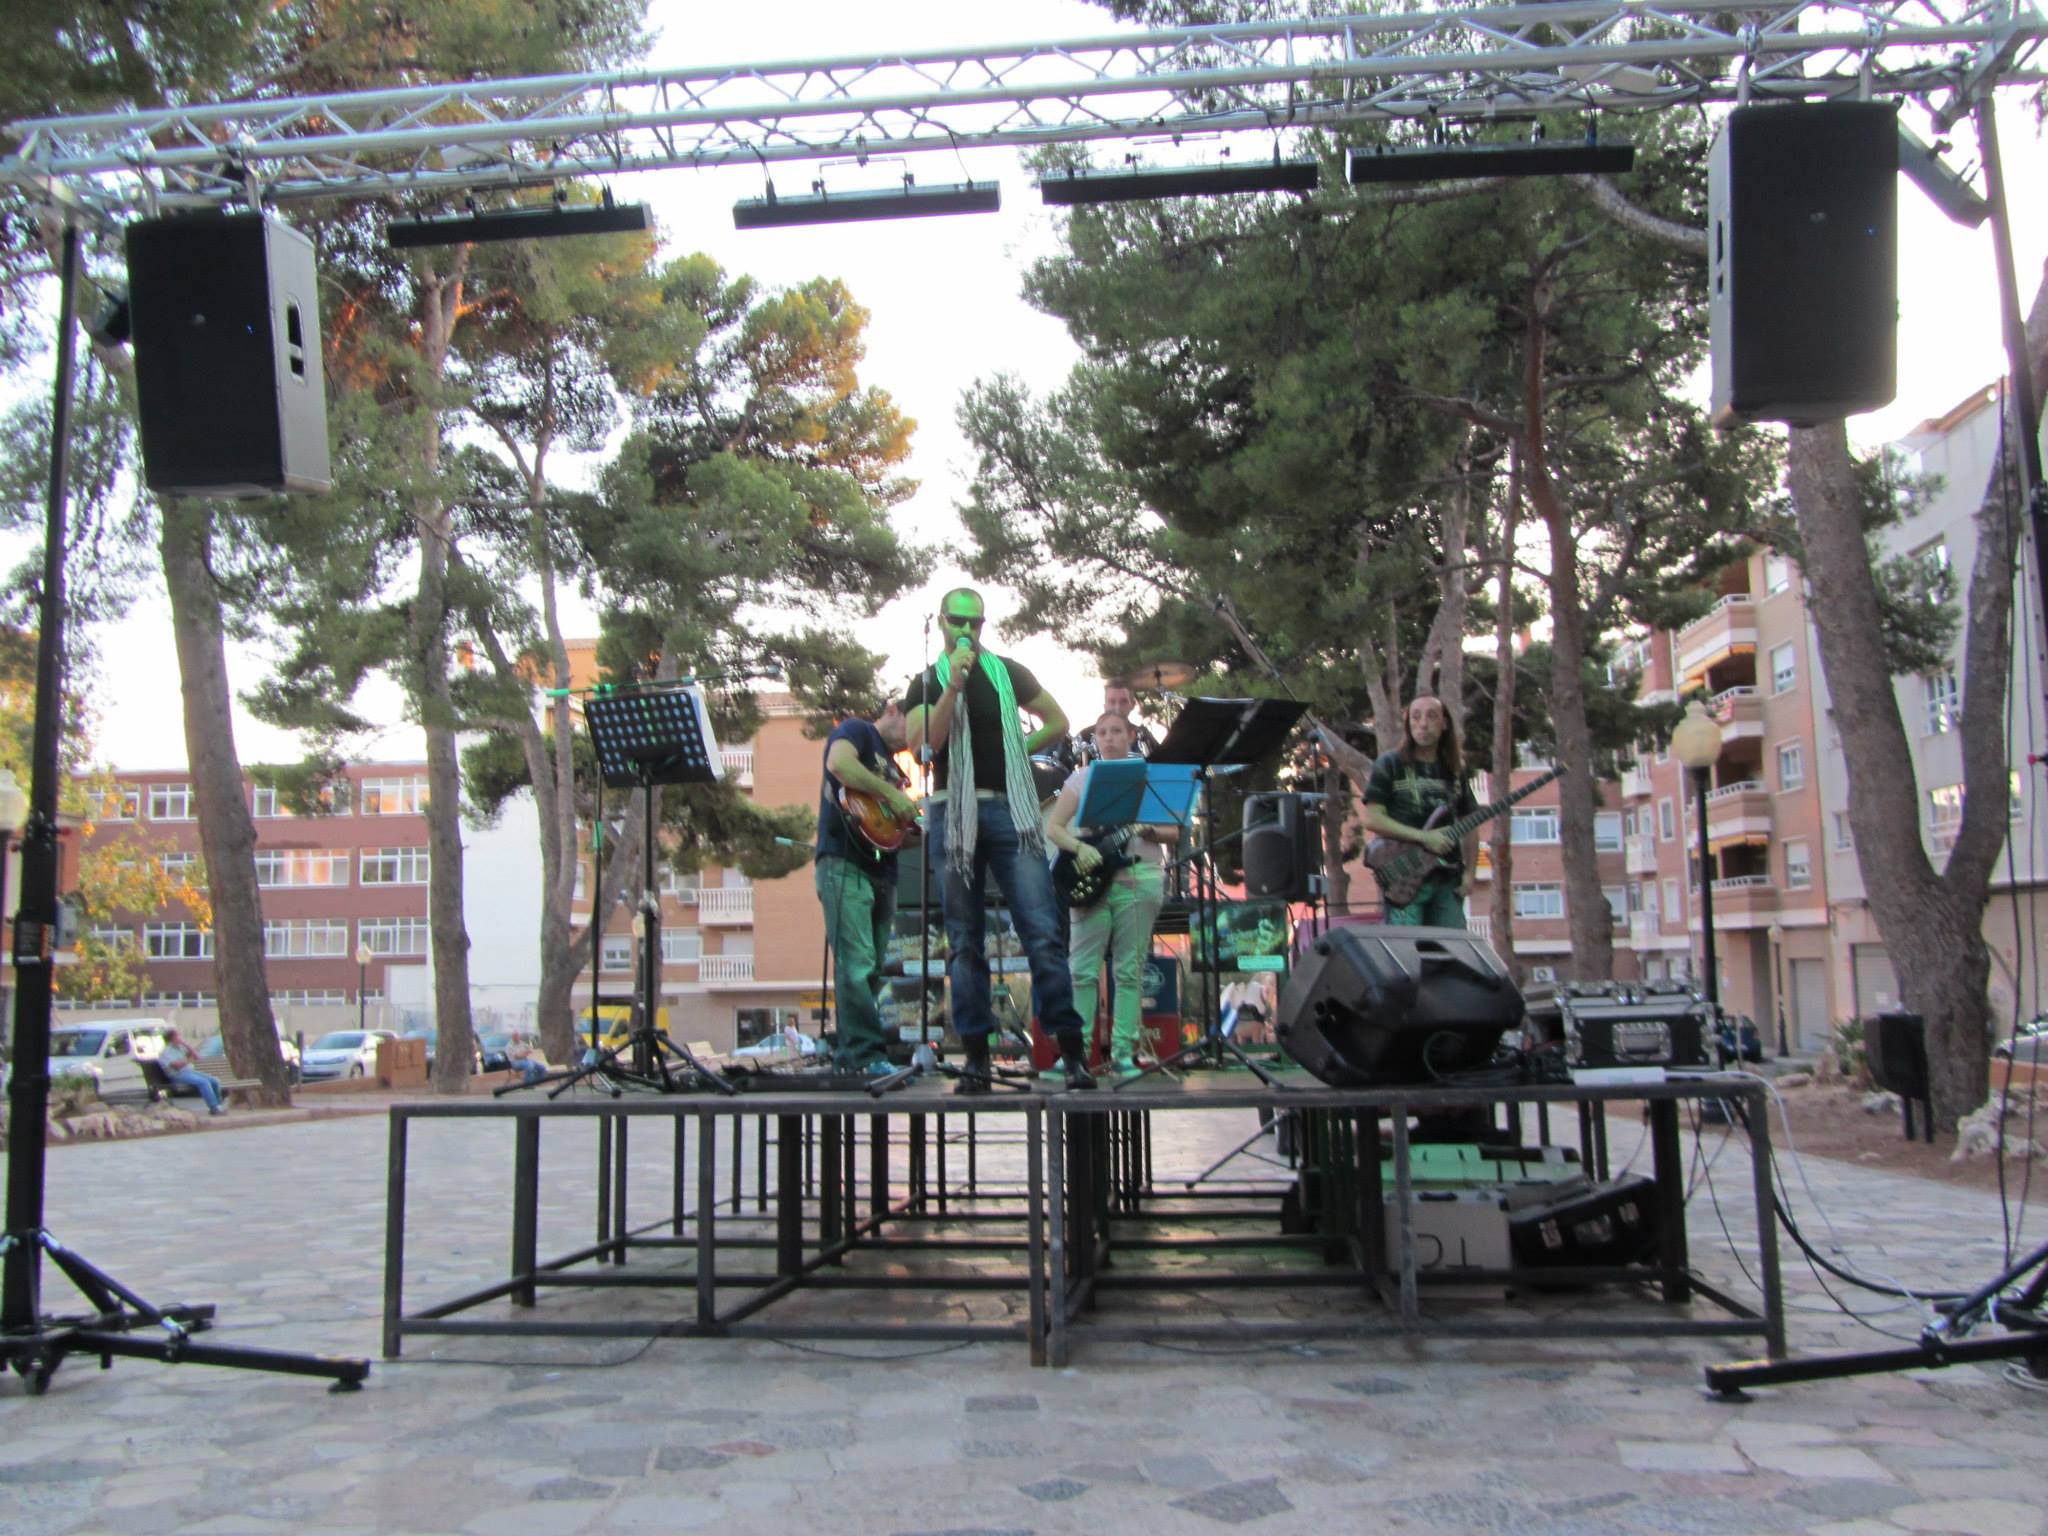 Local group concert @ Ibi, Alicante (Spain)